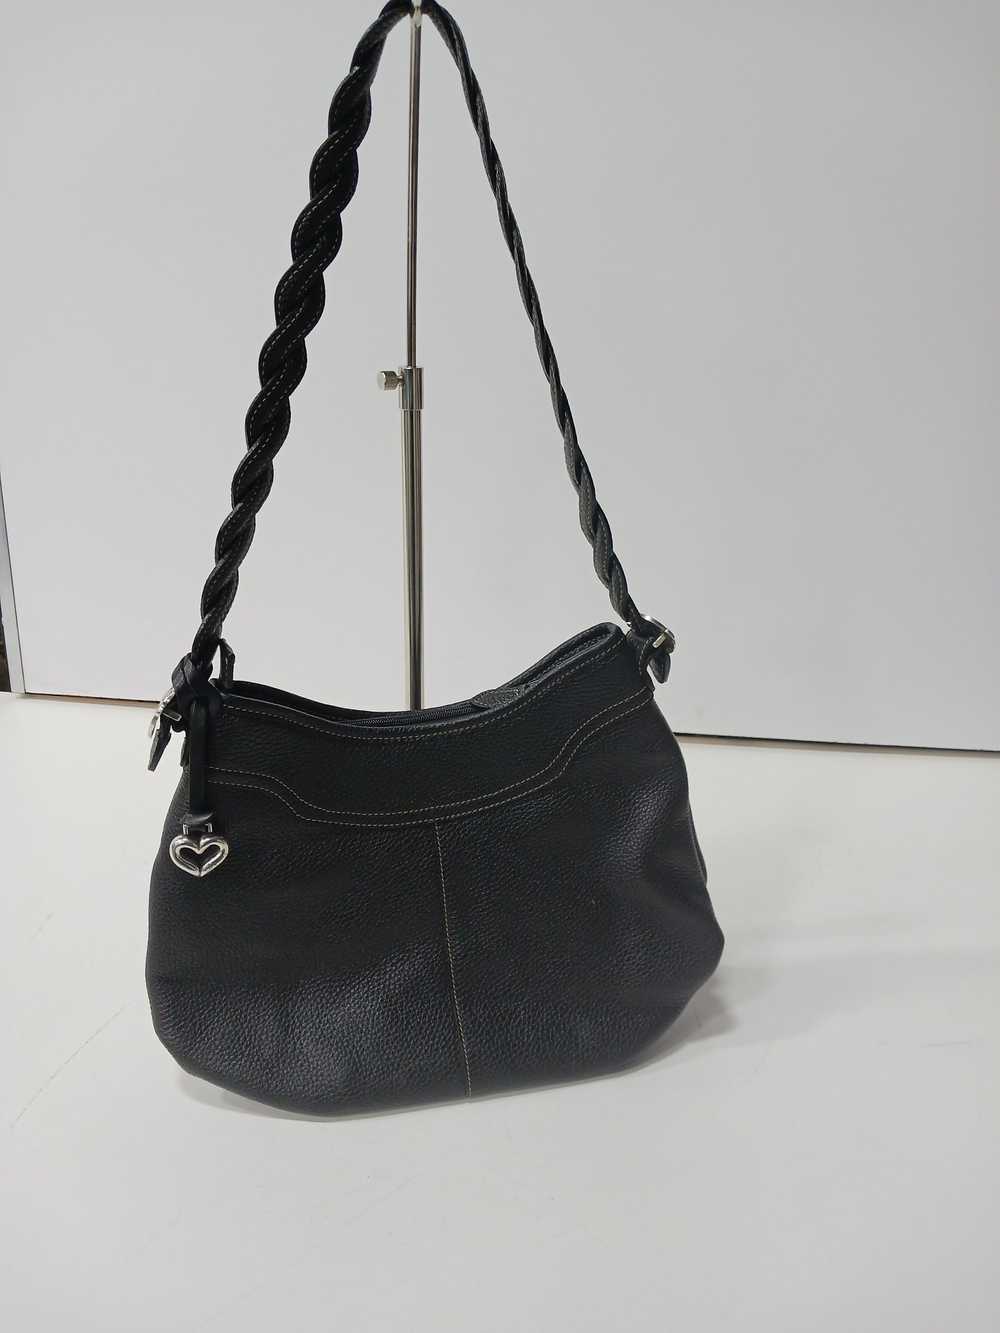 Brighton Black Leather Hobo Bag Purse - image 4